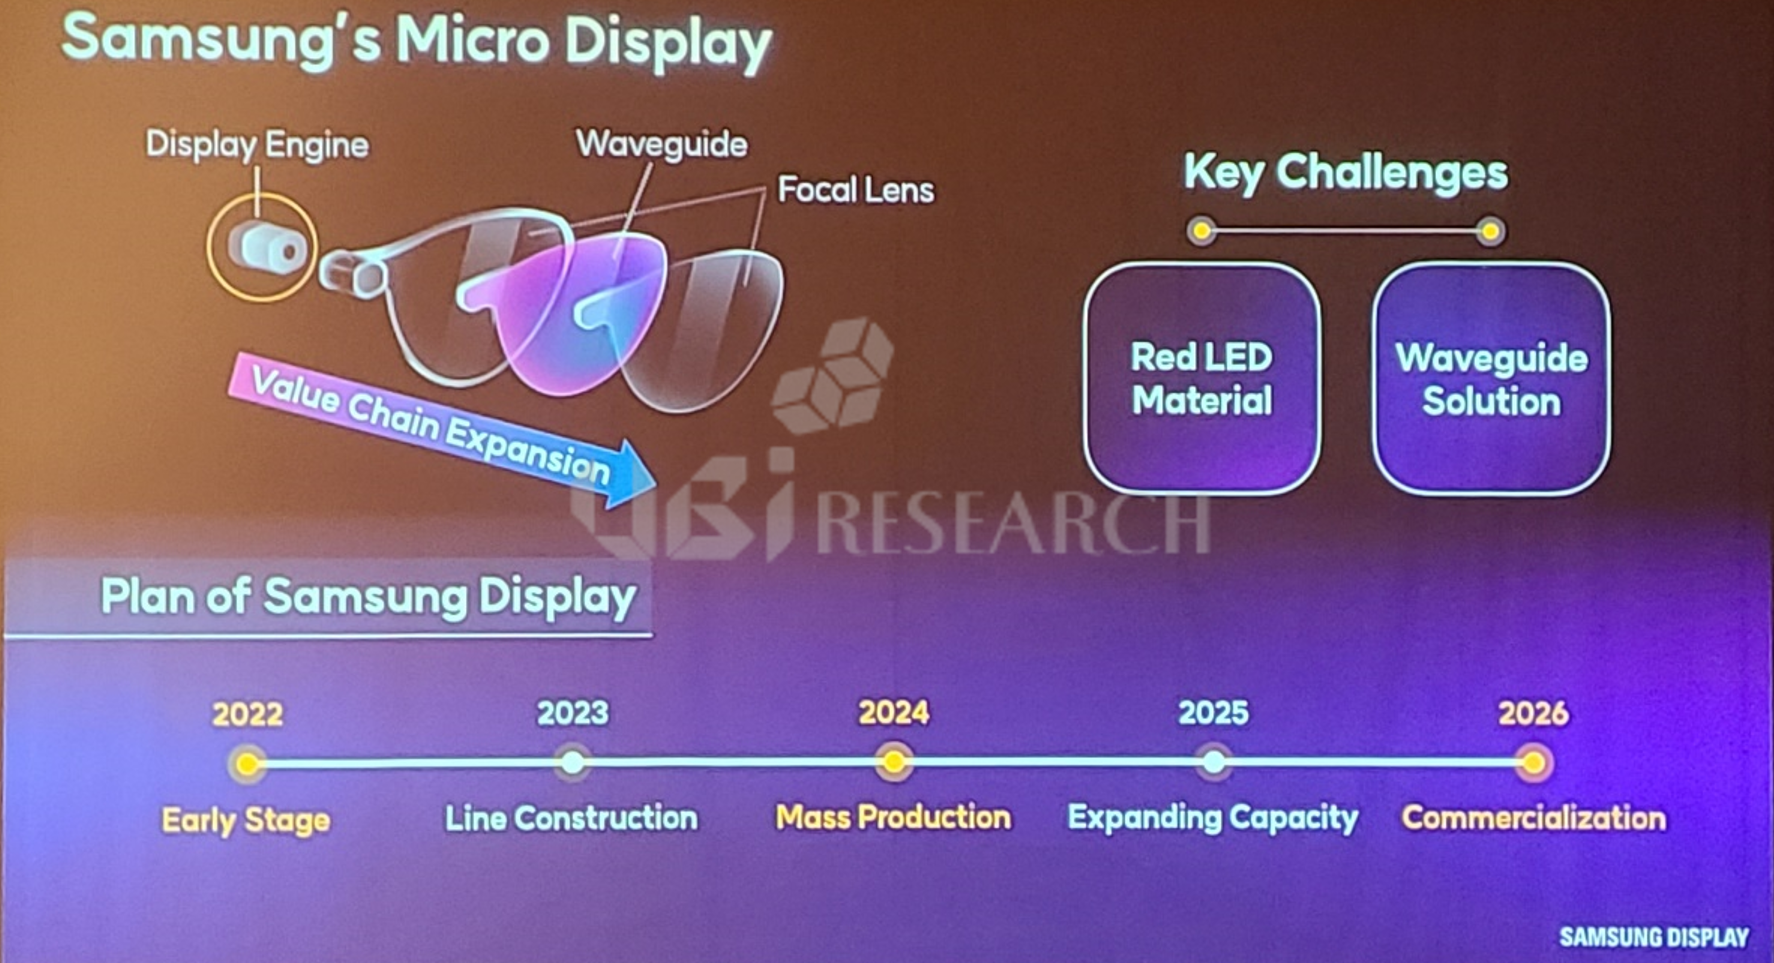 Samsung Display's AR/VR micro display